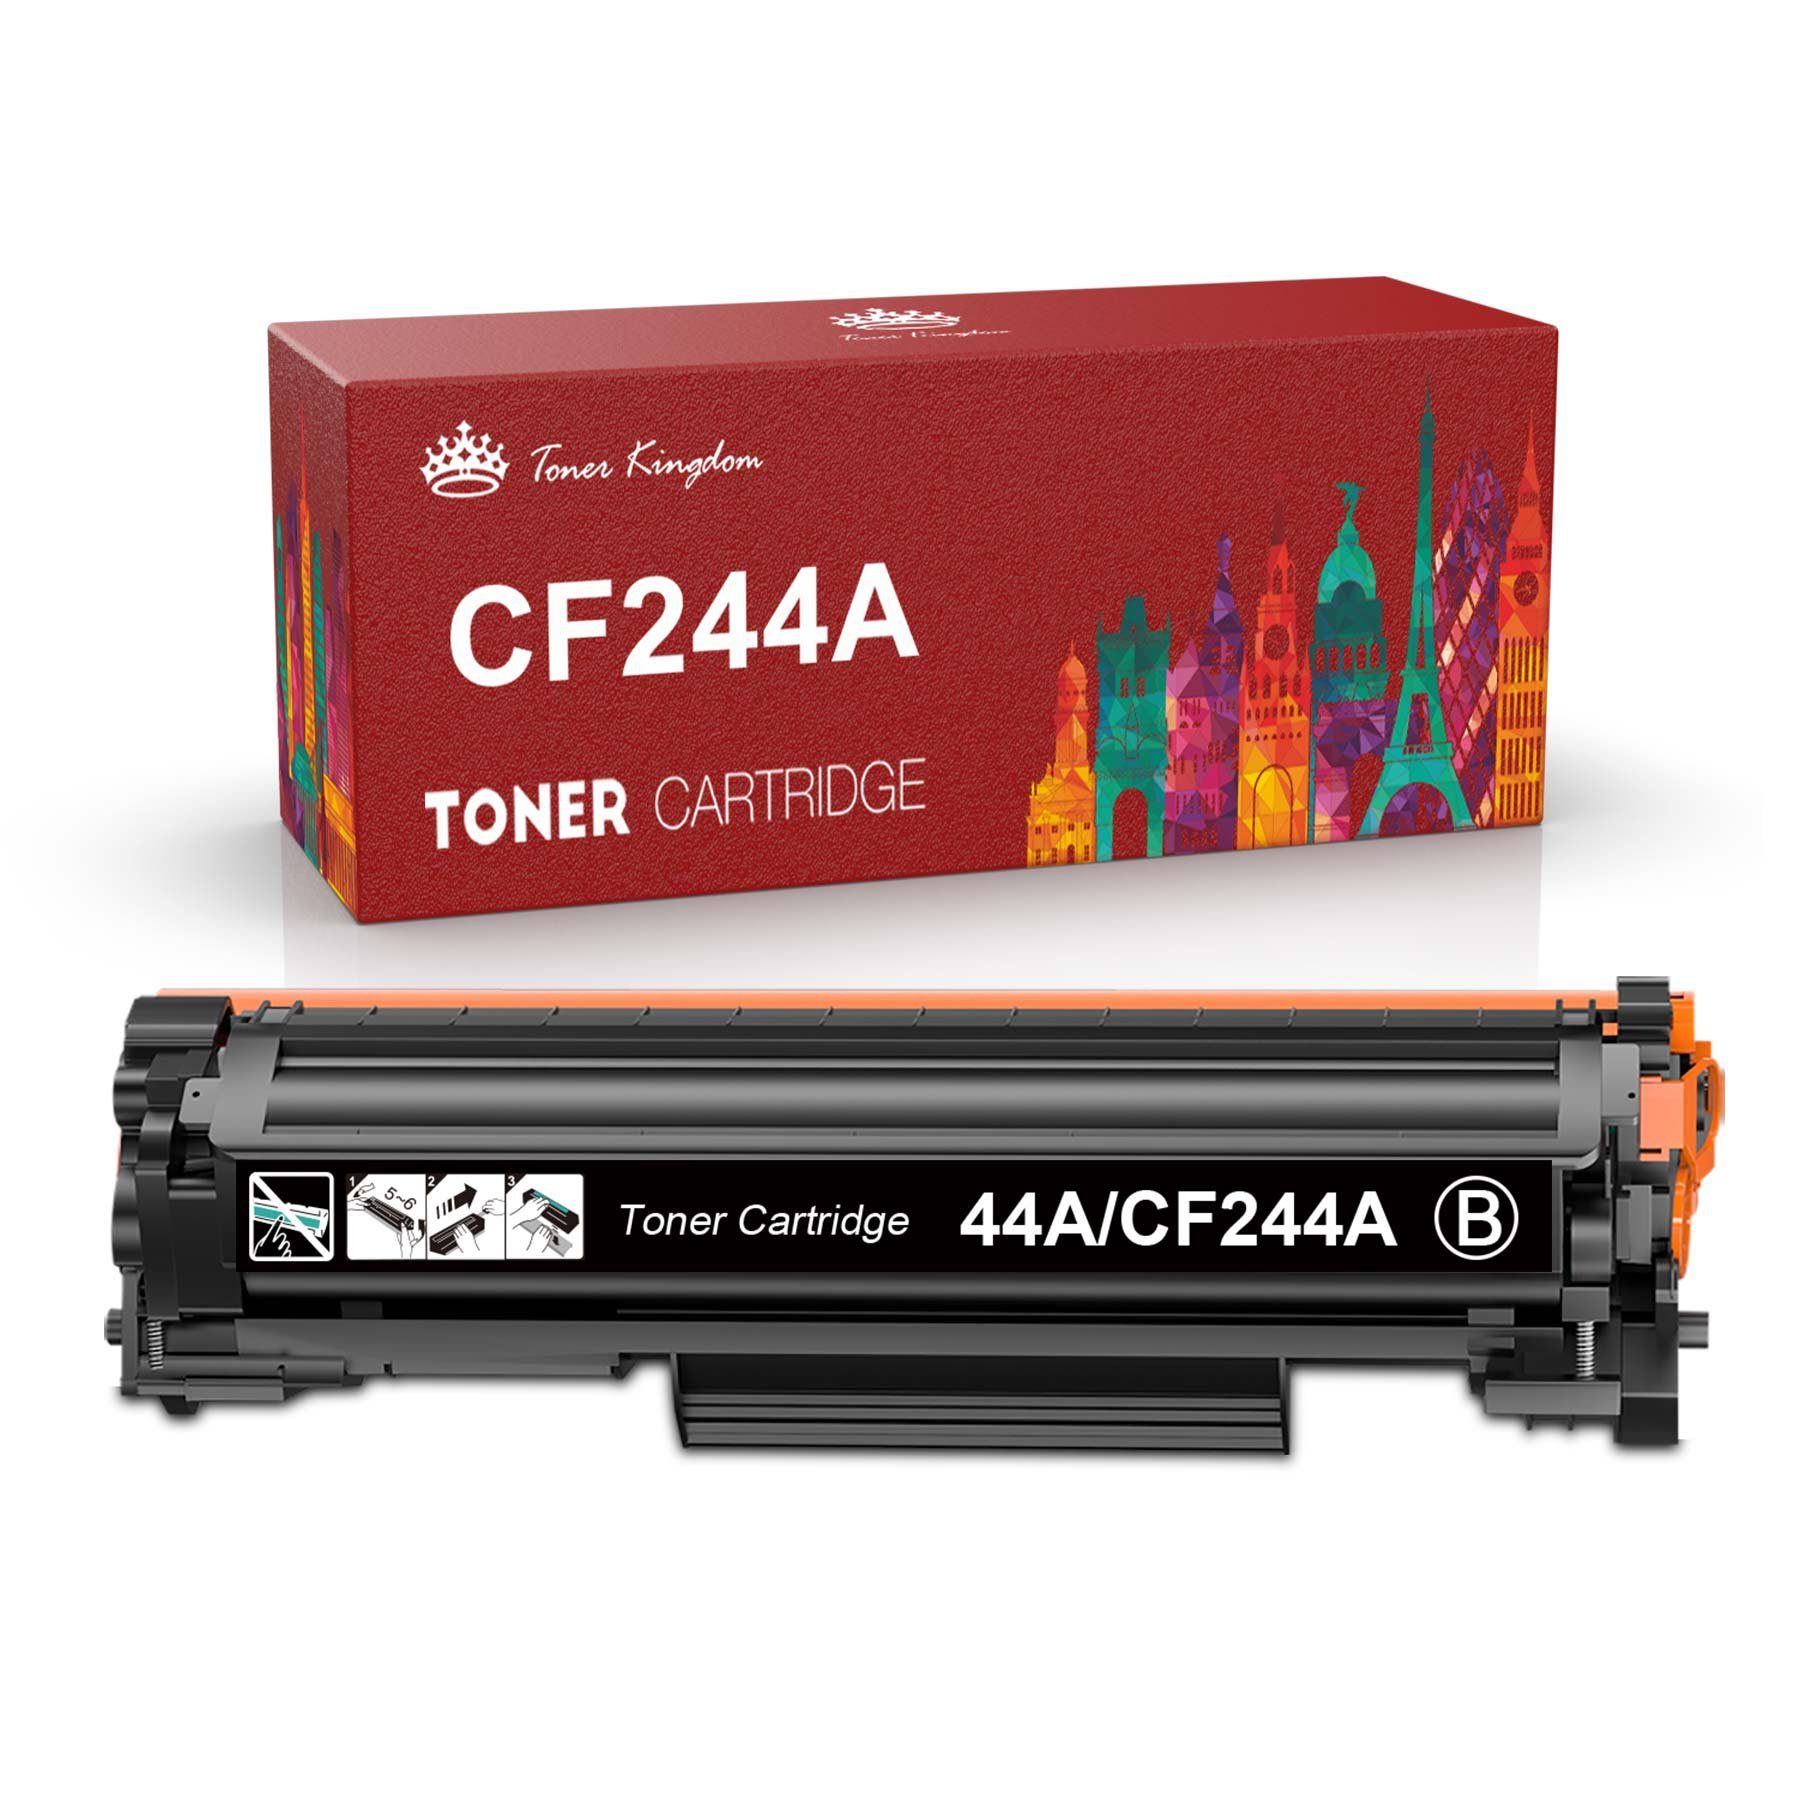 Toner Kingdom Tonerpatrone für HP 44A CF244A Laserjet Pro M15w M15a MFP M28w | Tonerpatronen